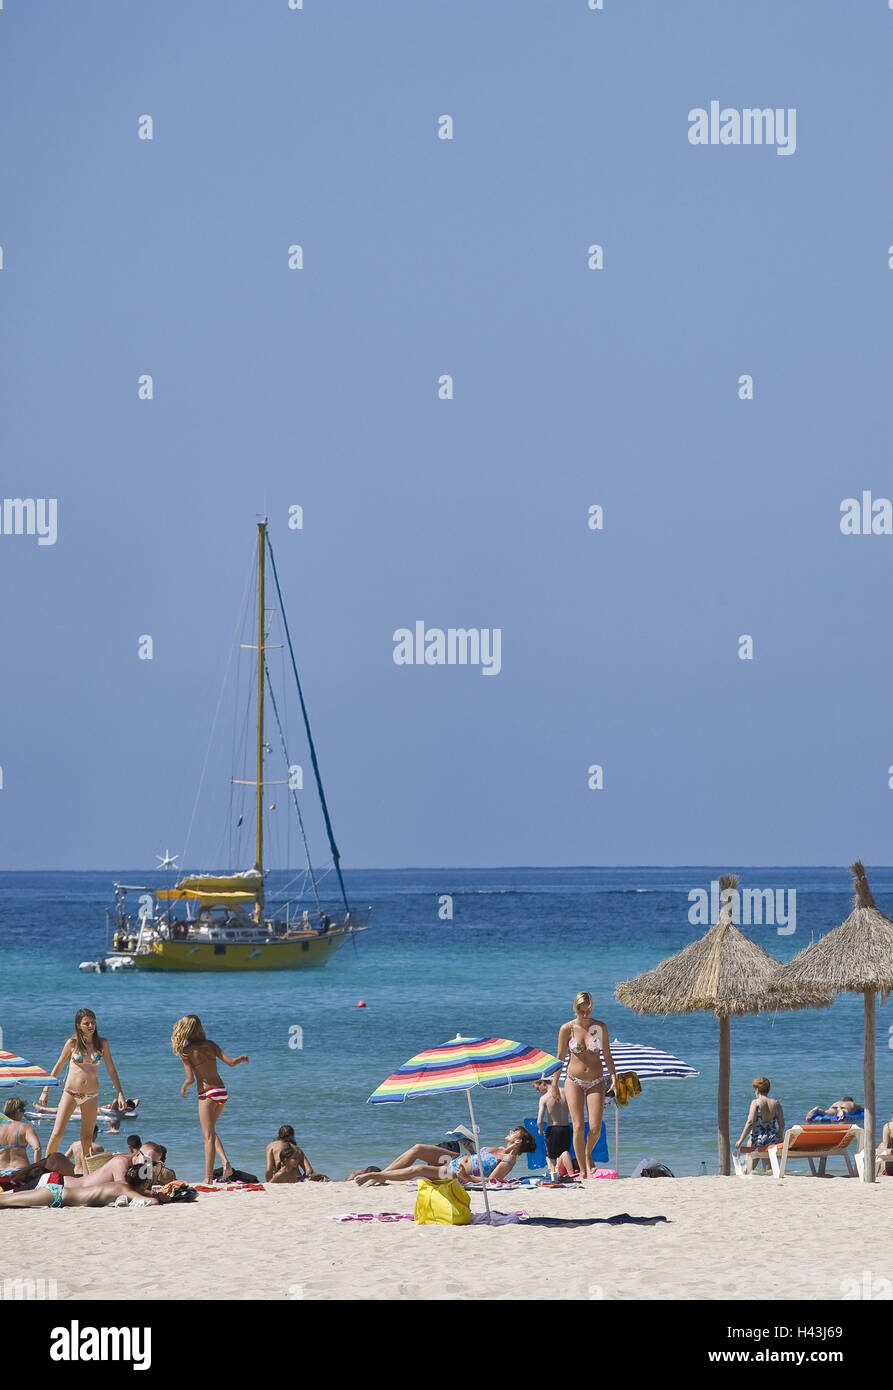 Spain, the Balearic Islands, island Majorca, Can Pastilla, beach, tourist, sea, boot, no model release, Stock Photo